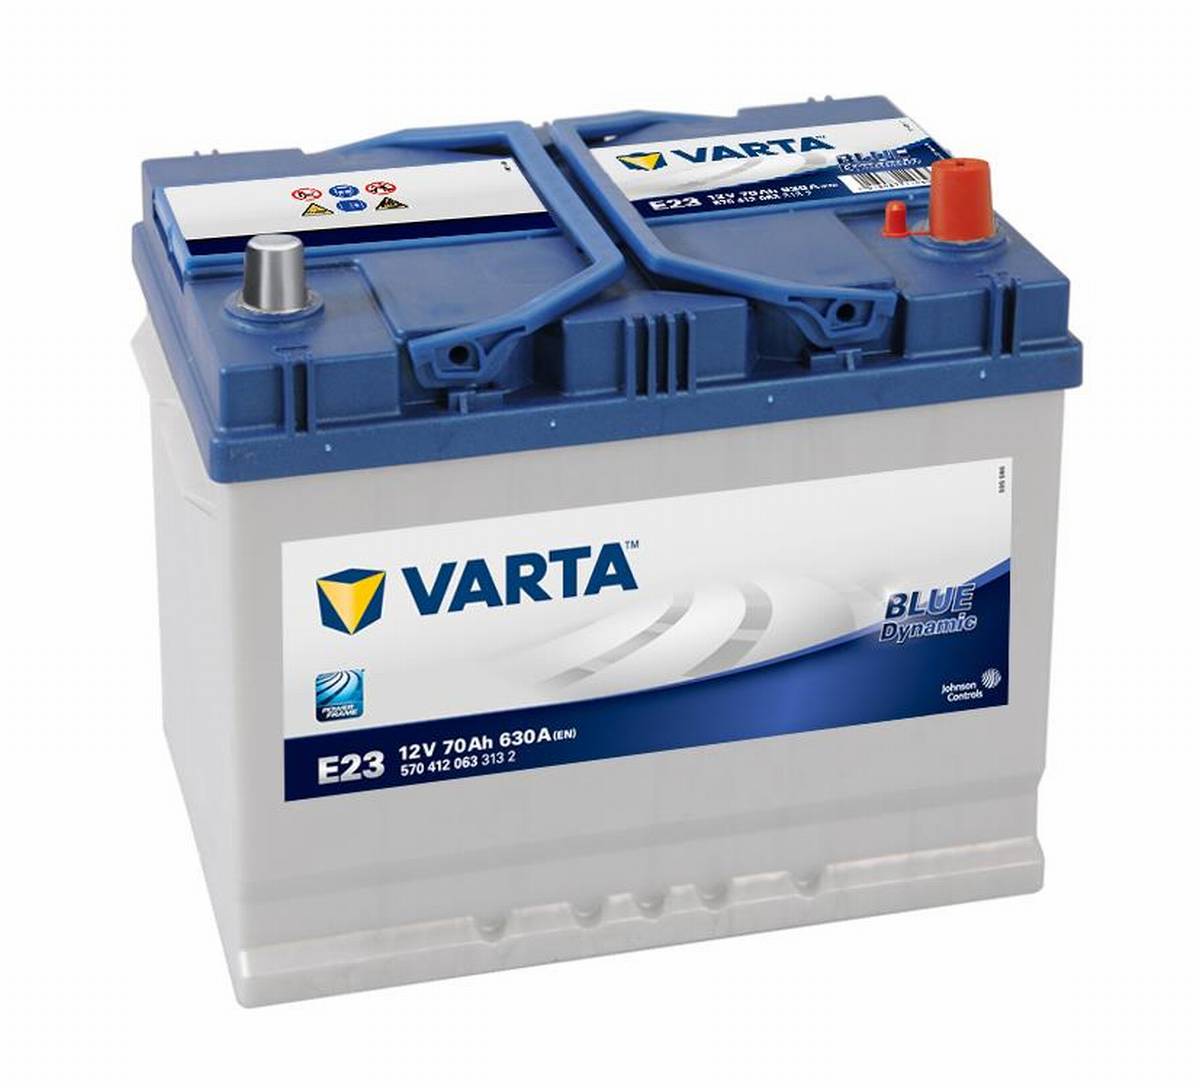 VARTA E23 Blue Dynamic 12V 70Ah 630A Autobatterie 570 412 063